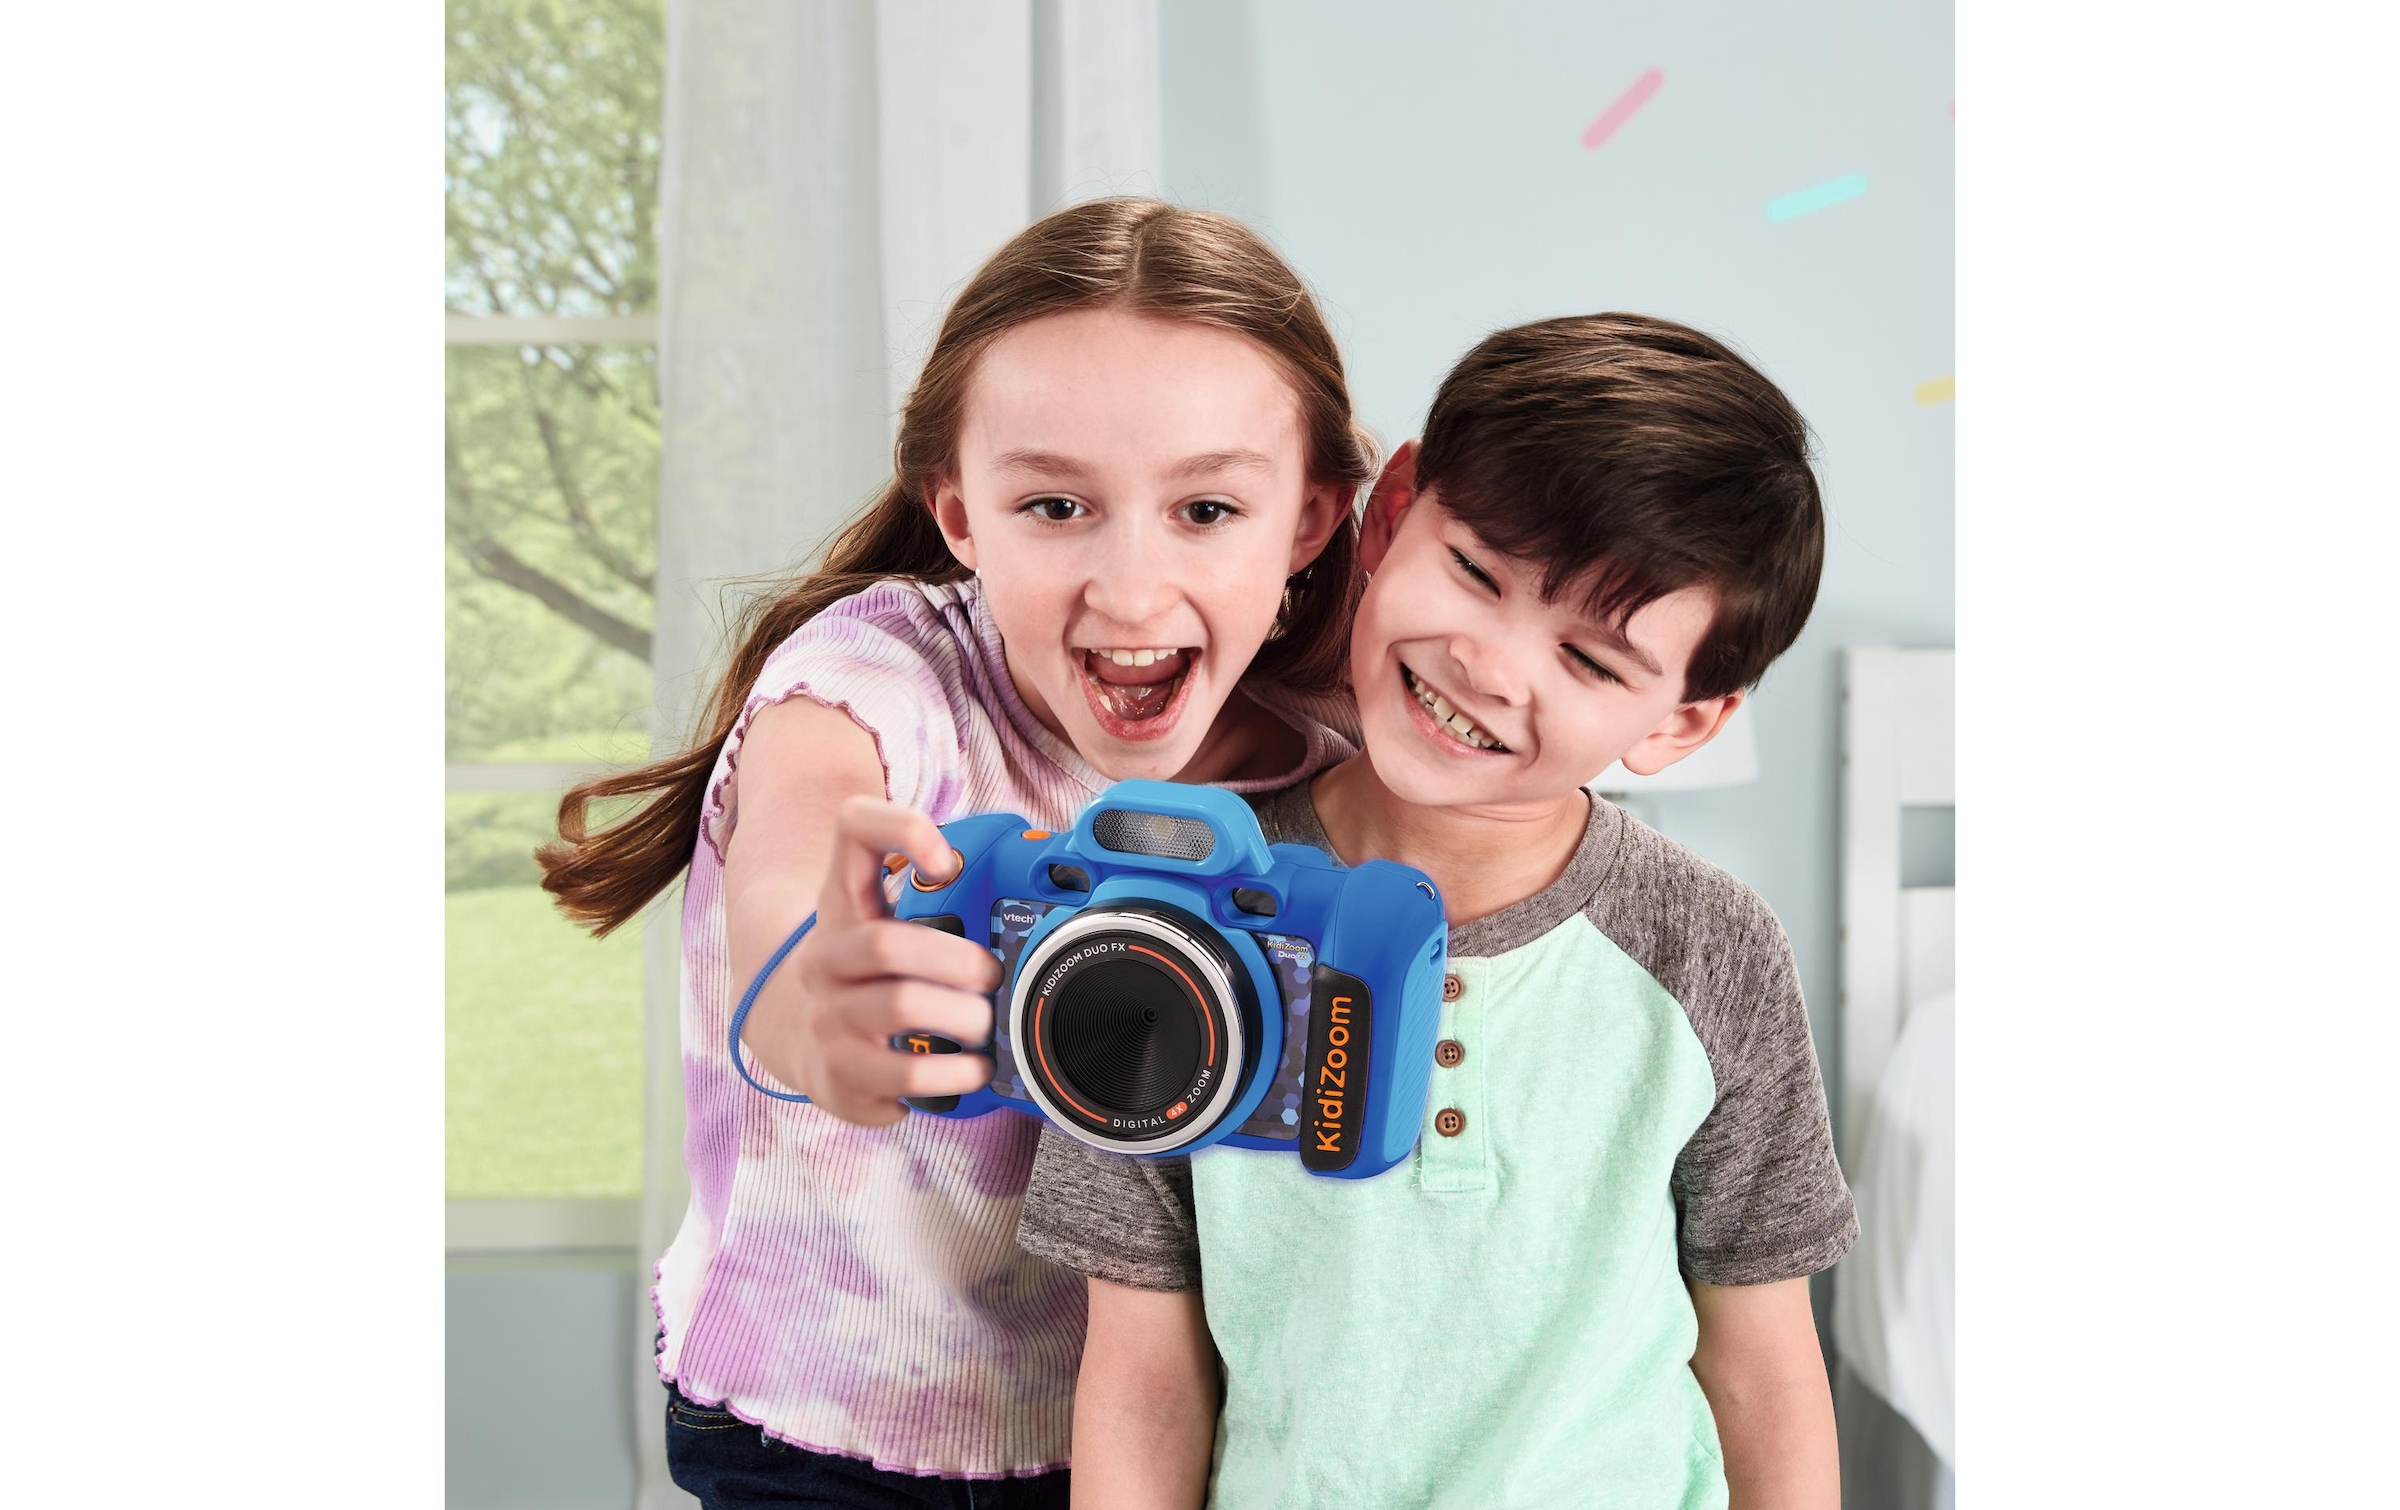 Vtech® Kinderkamera »Kidizoom Duo FX -FR- Blau«